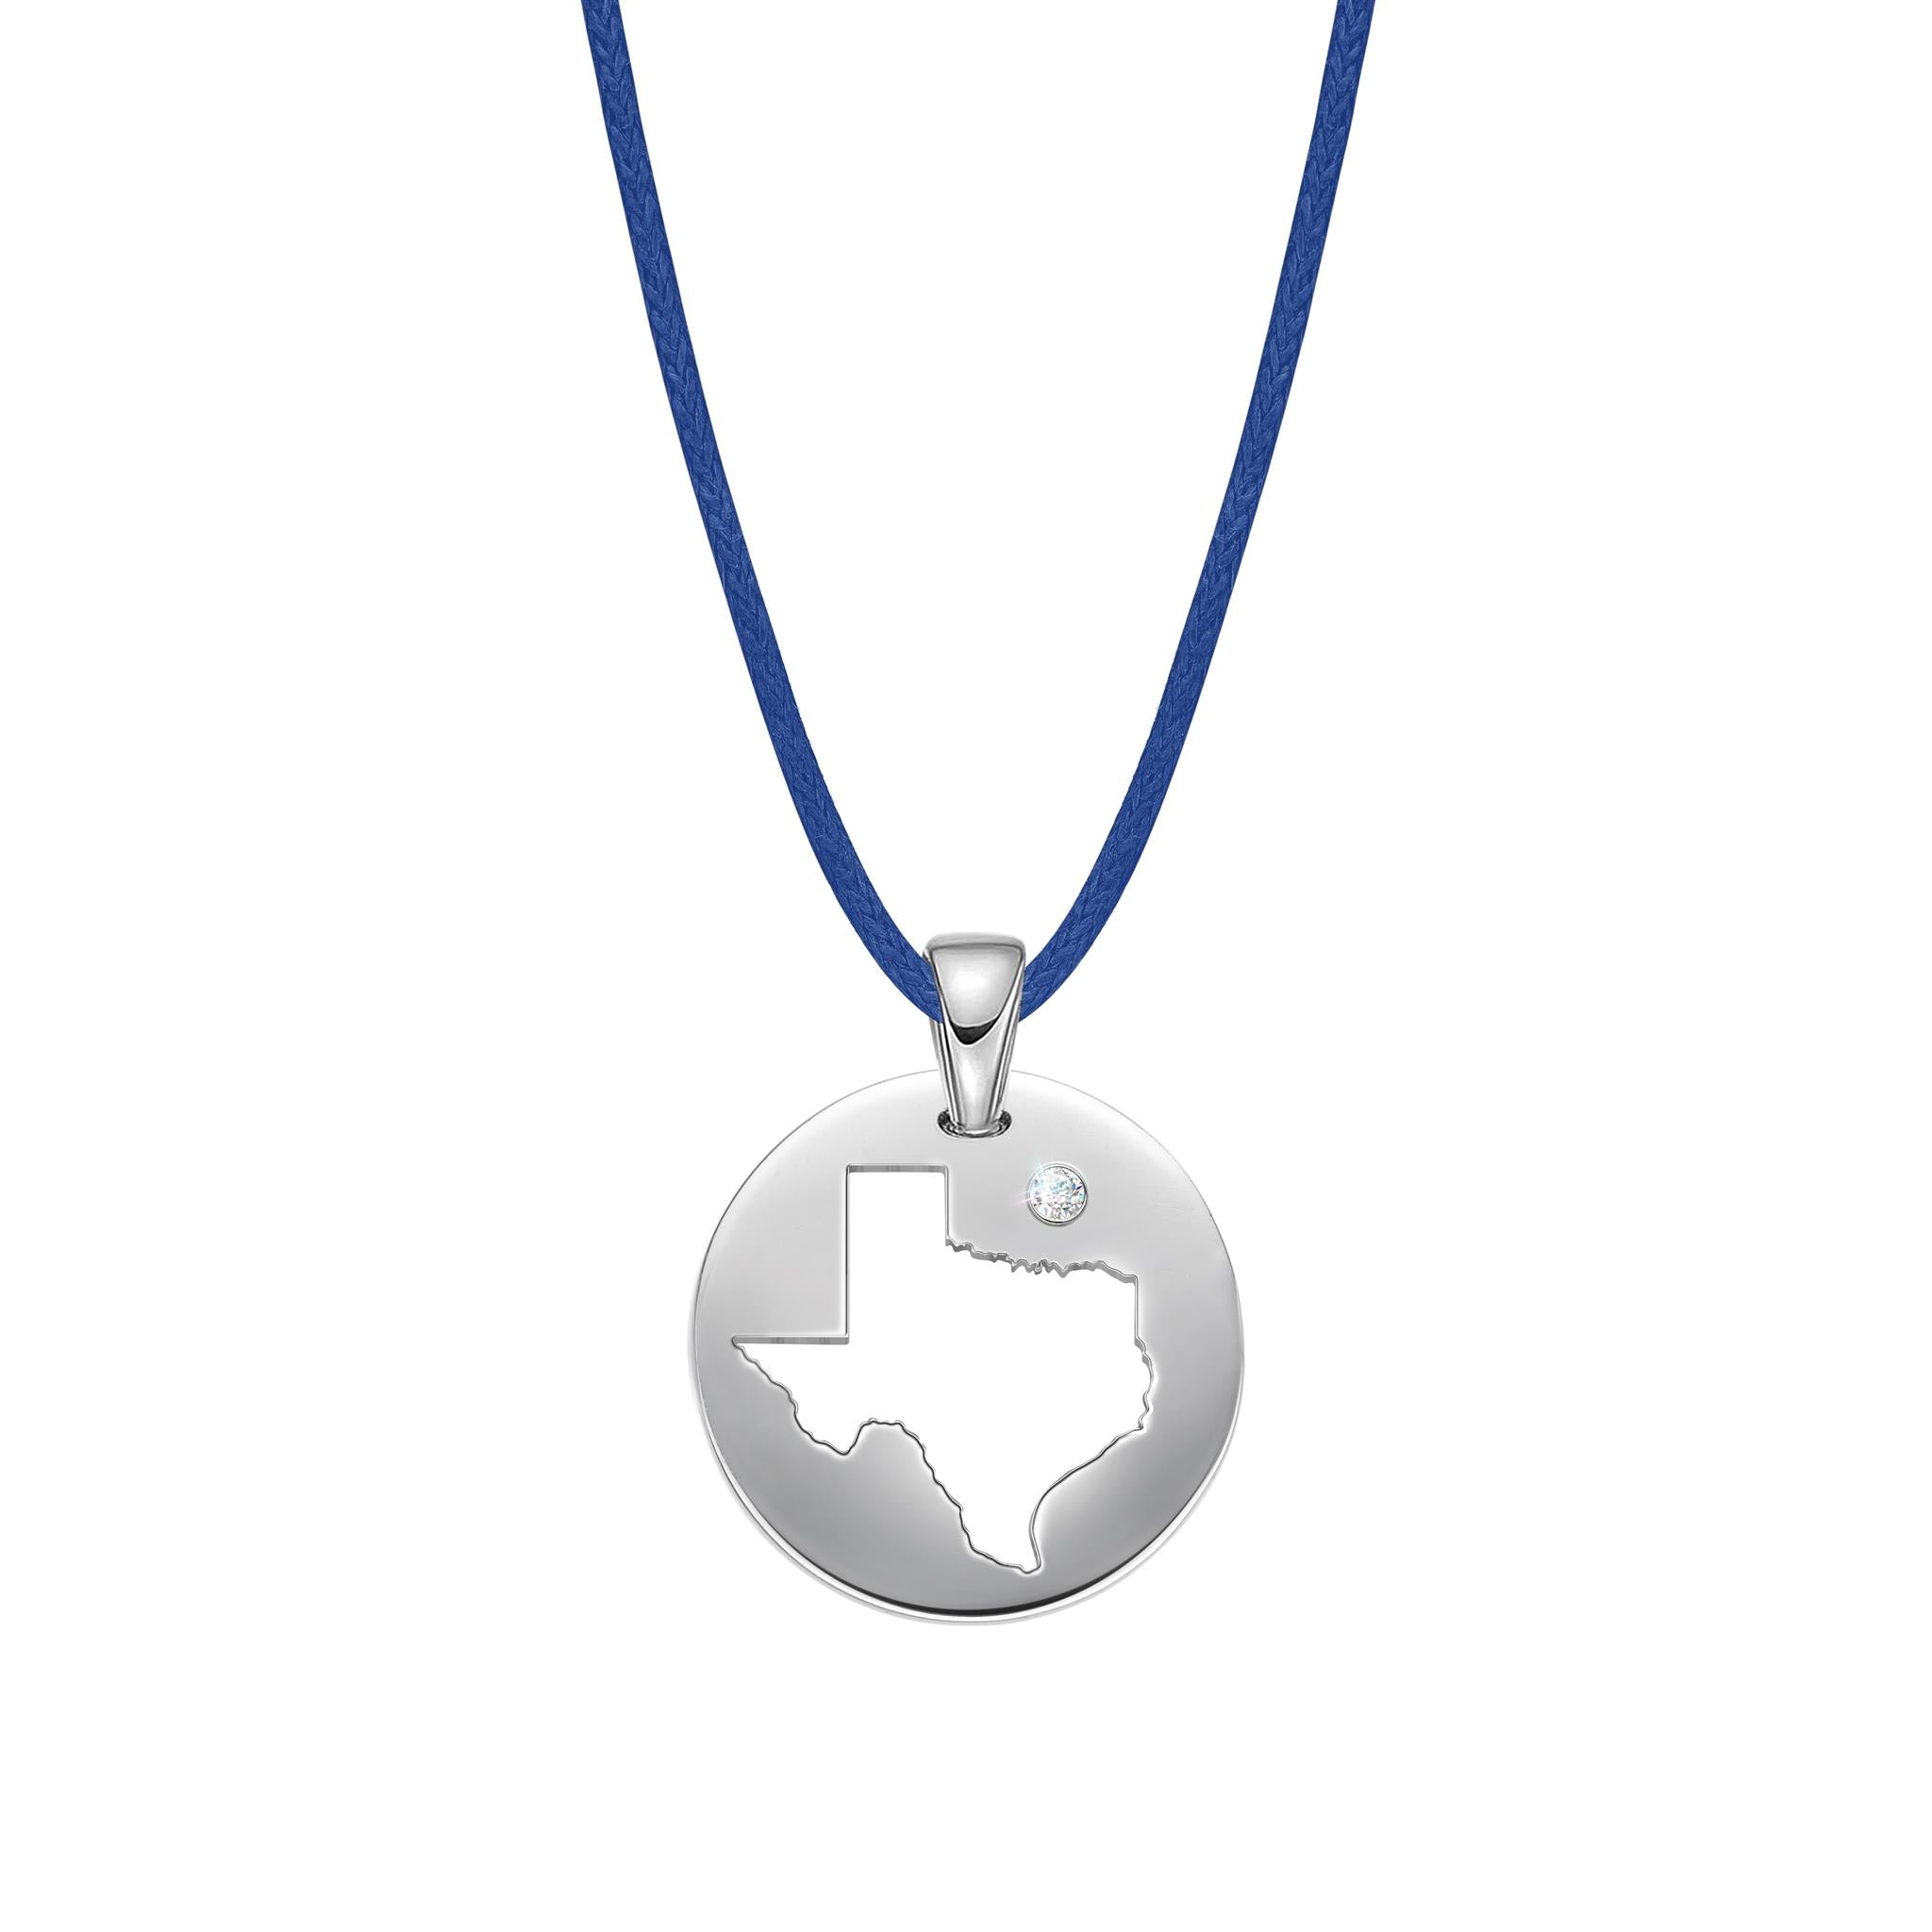 Denizen bracelet and necklace of Texas - Cowboy country bracelet - Lone Star necklace